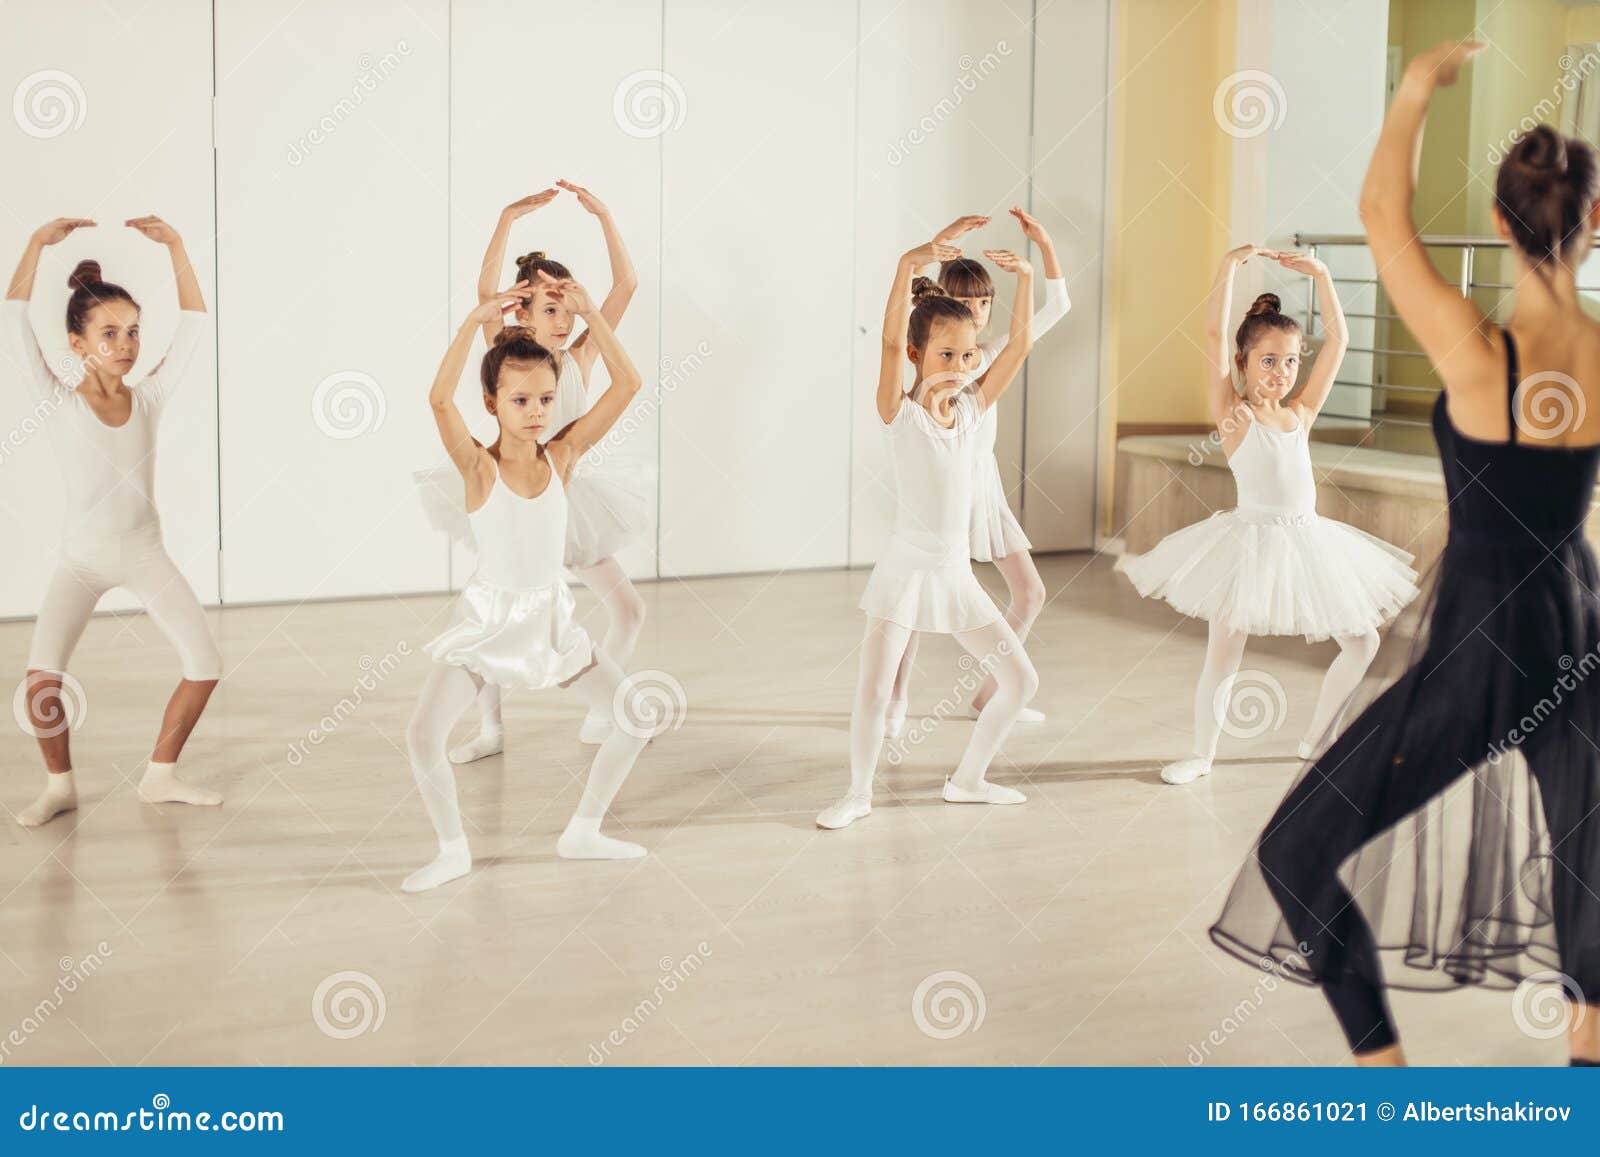 Professional Ballet Dancer Teach Kids To Dance Stock Image